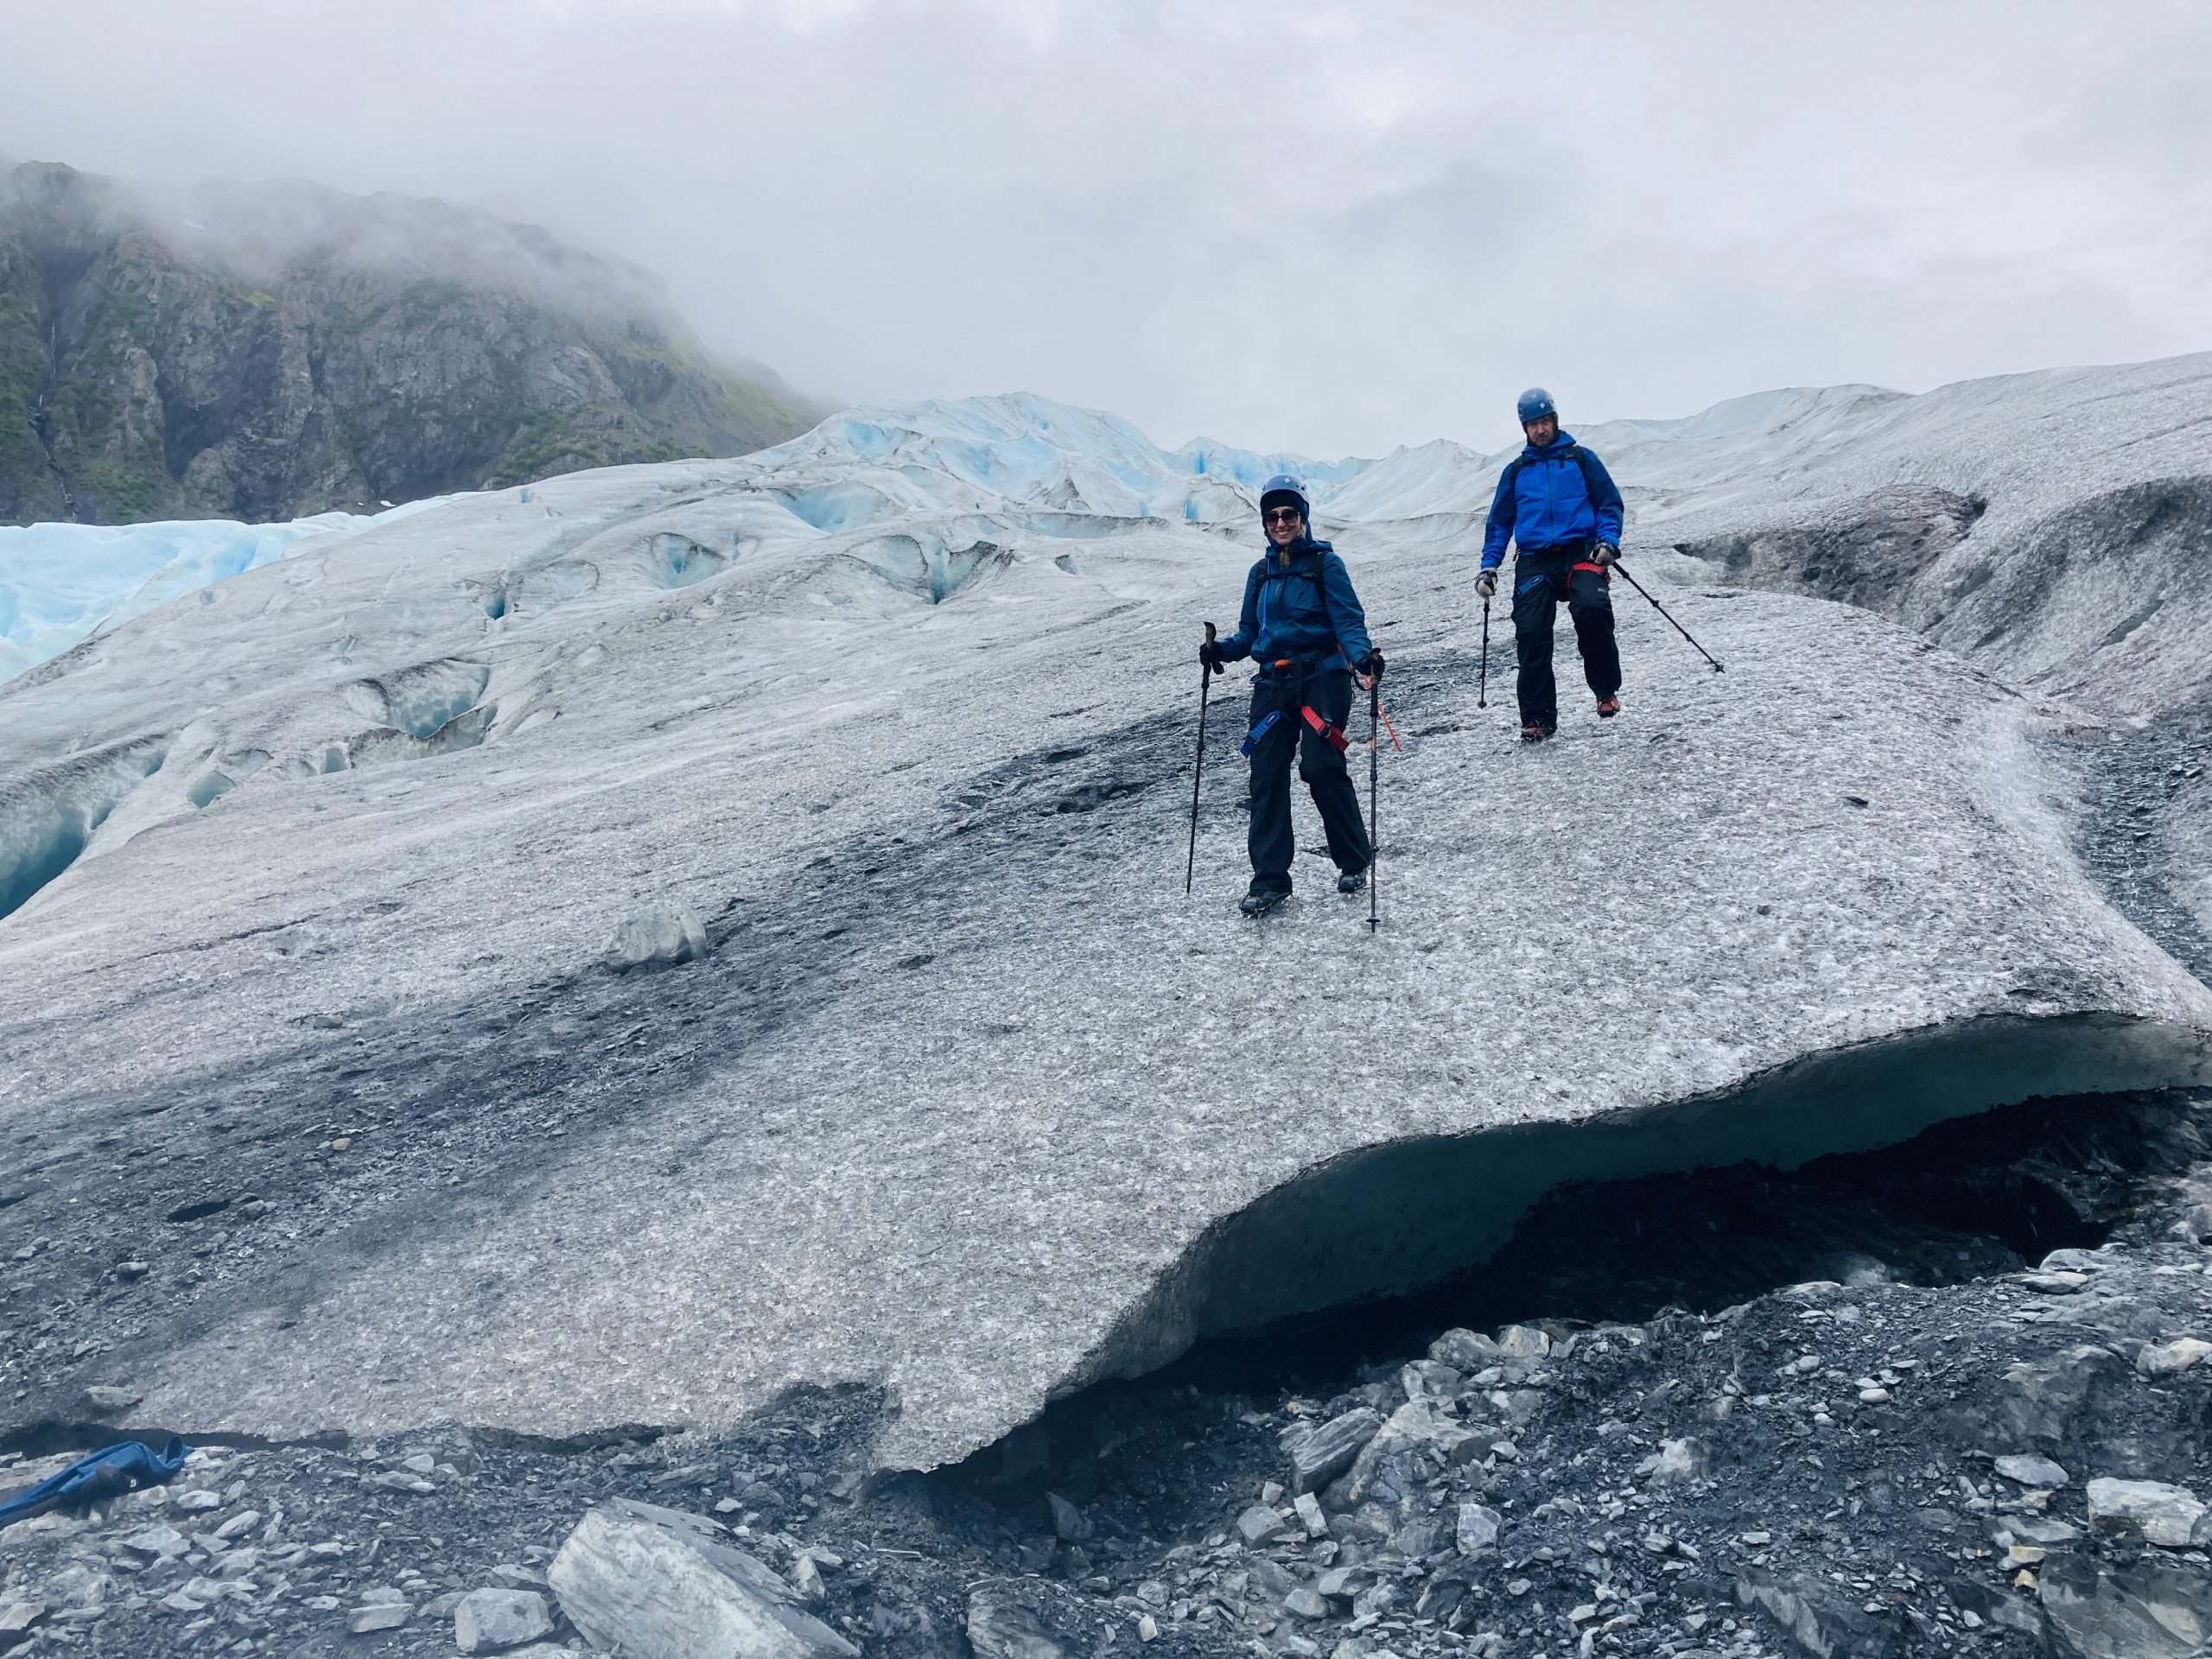 TRIP REPORT: 8/1/22 Exit Glacier Ice Hiking Adventure